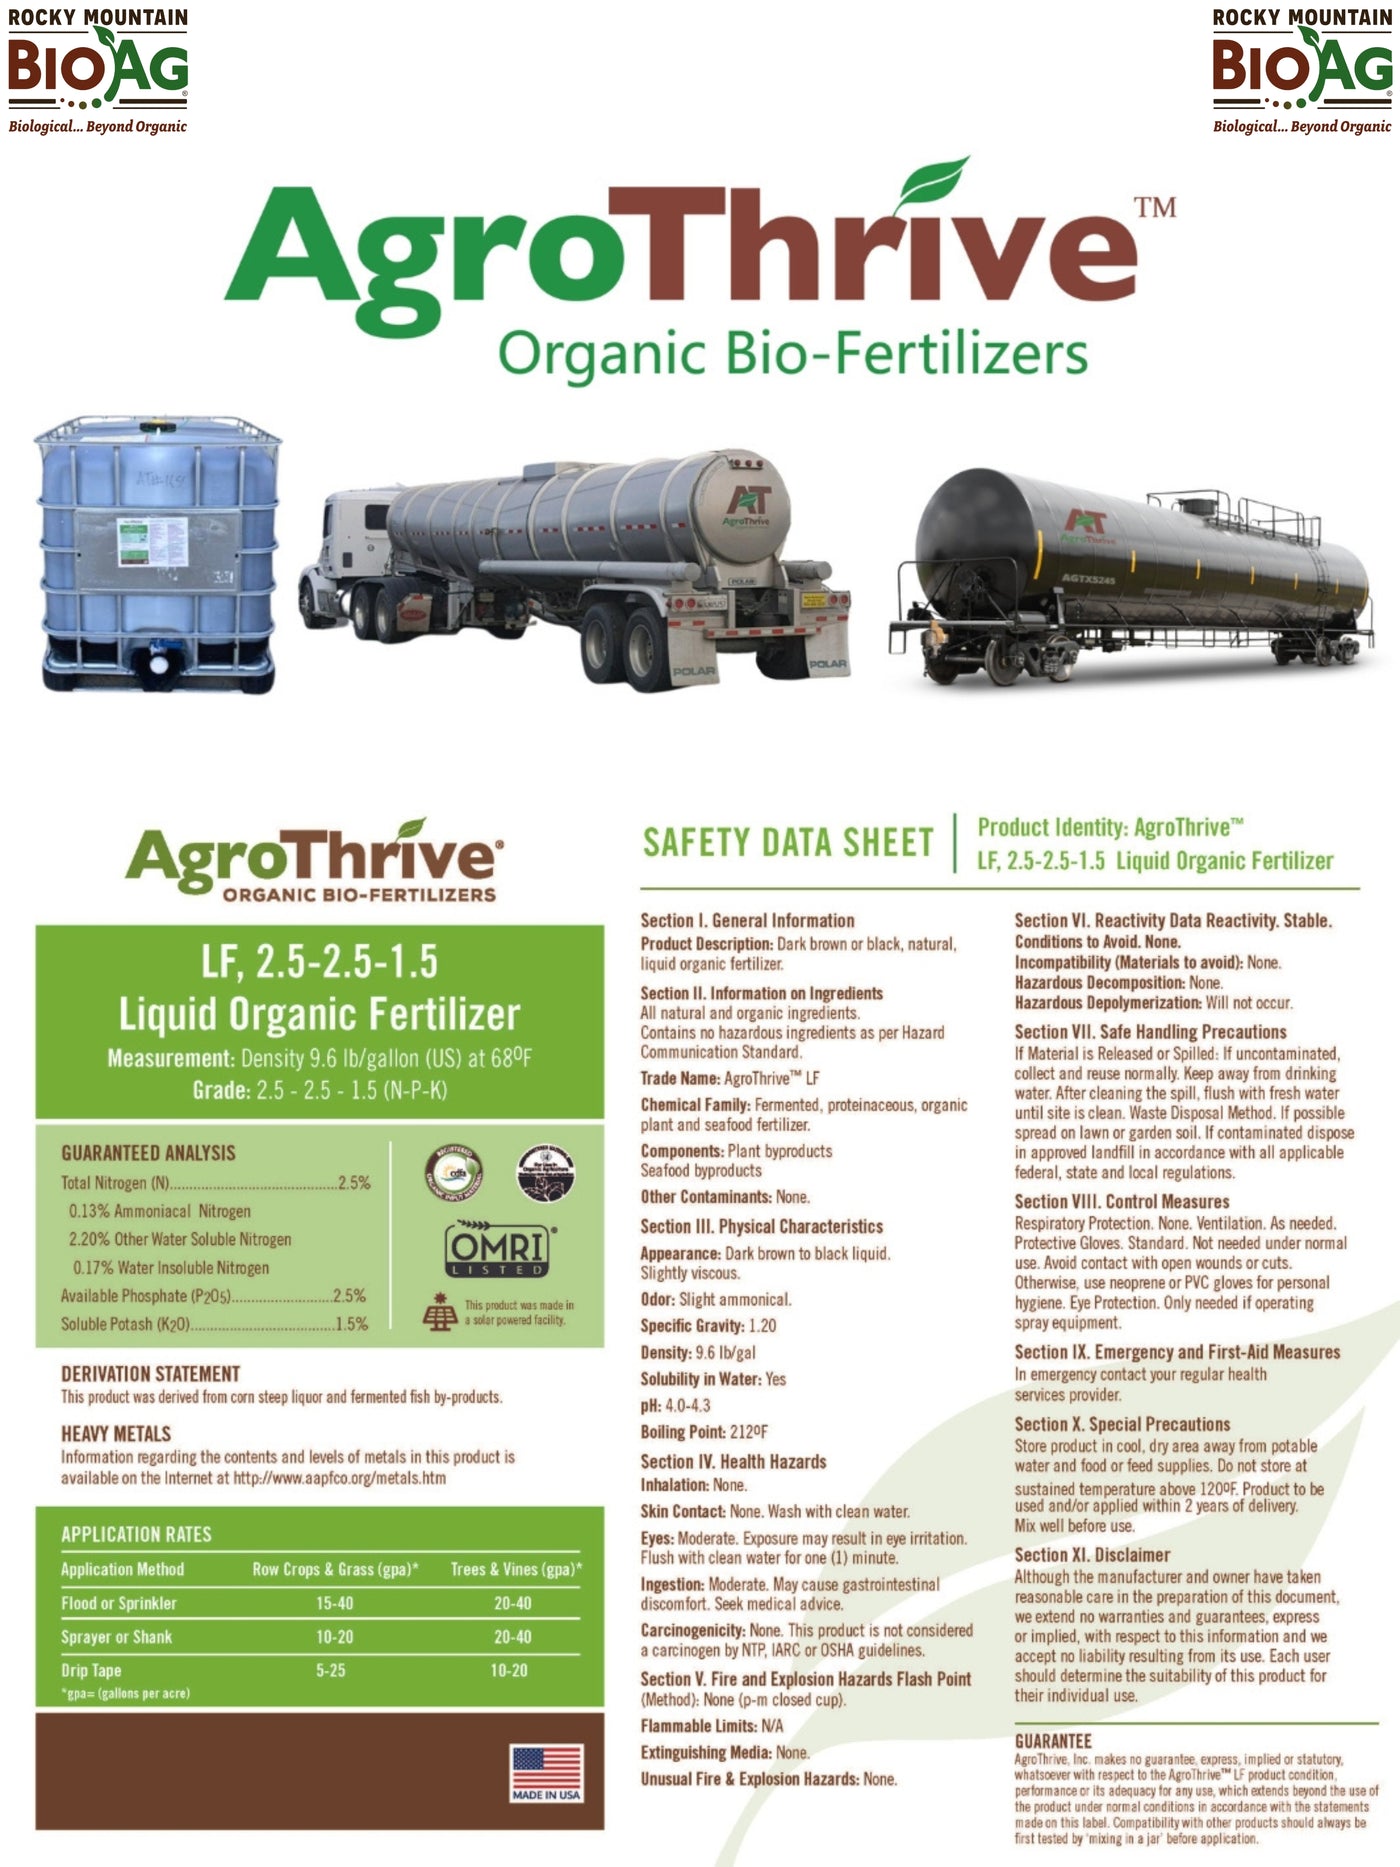 AgroThrive LF 2.5-2.5-1.5 Liquid Organic Fertilizer Information